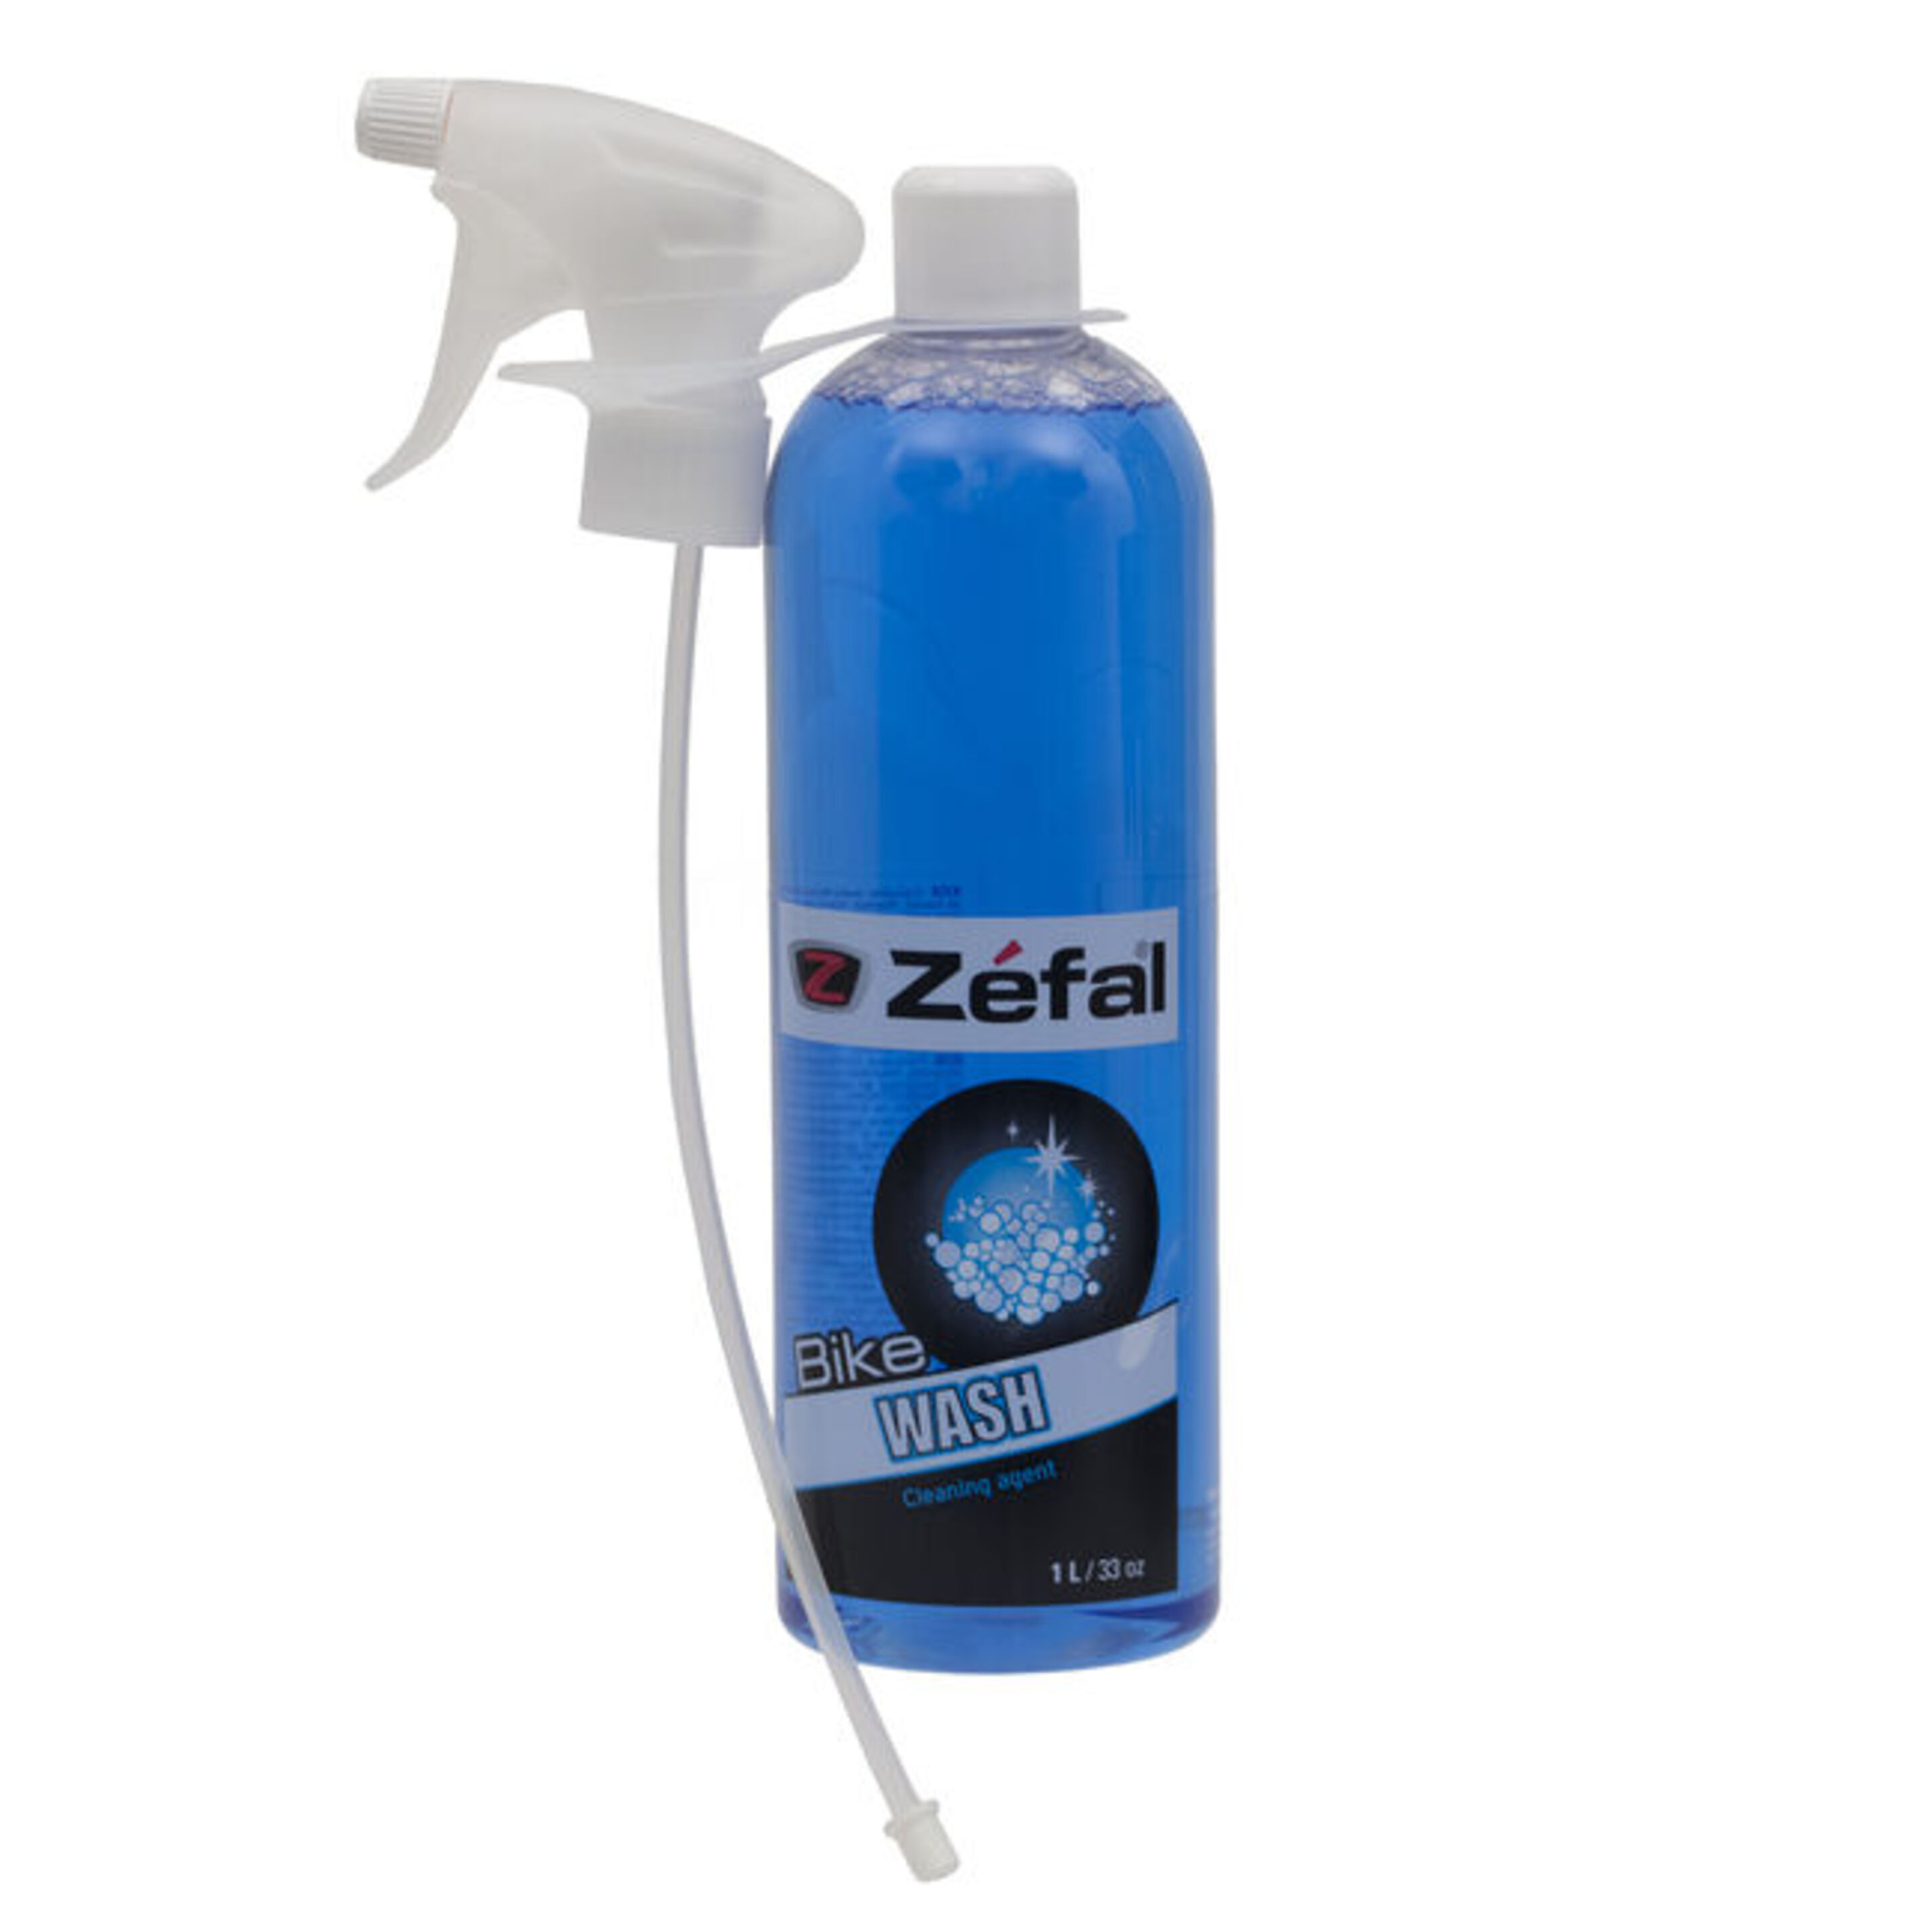 Limpiador Zefal Bike Wash - azul - 